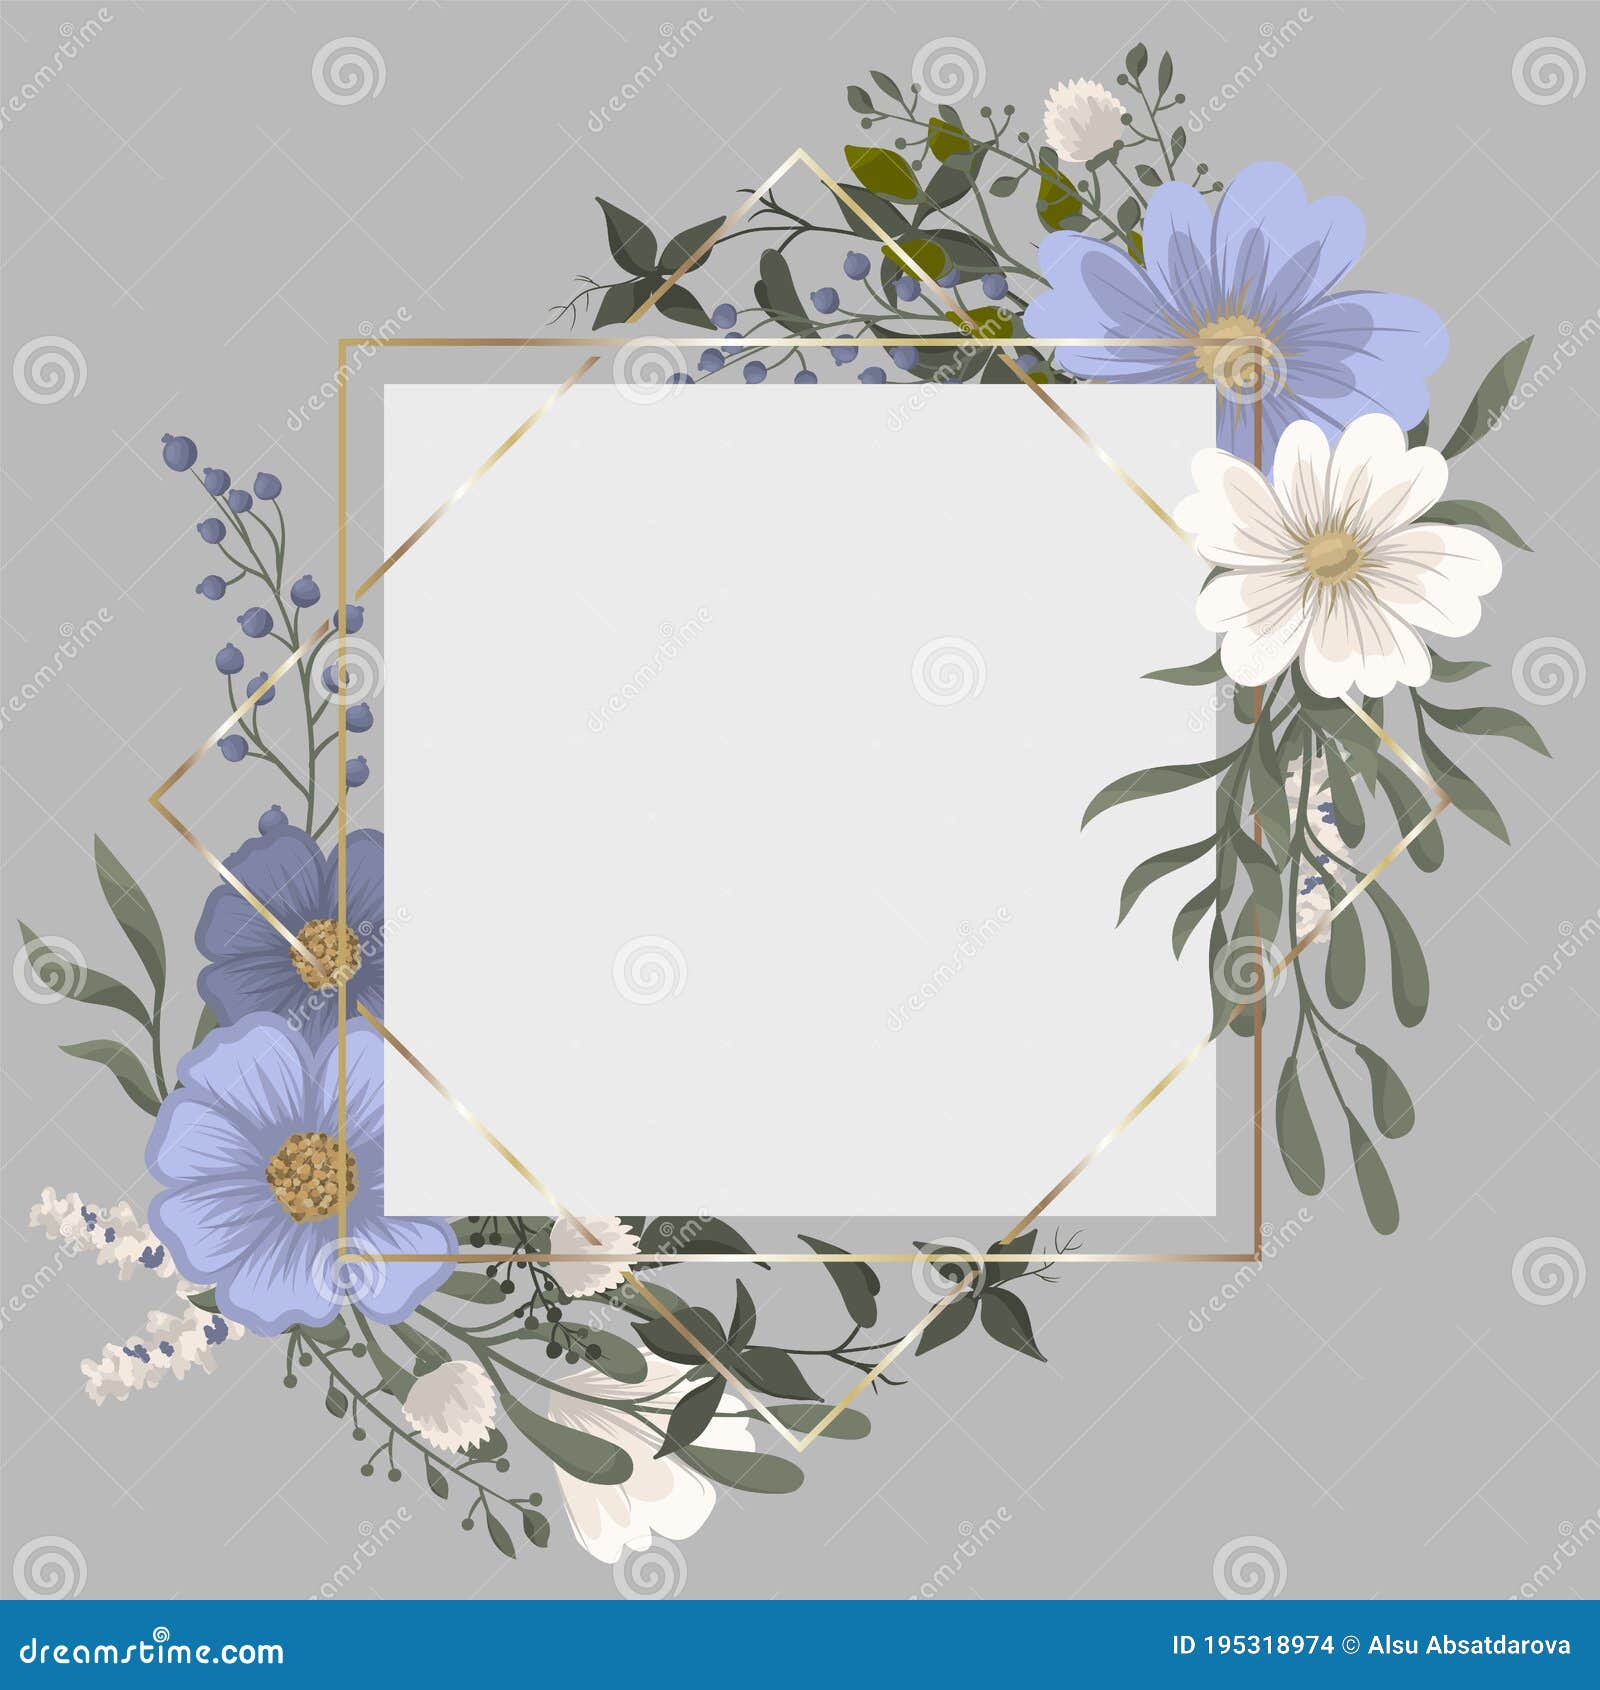 Floral Border Background - Light Blue Flowers Stock Vector - Illustration  of design, awesome: 195318974